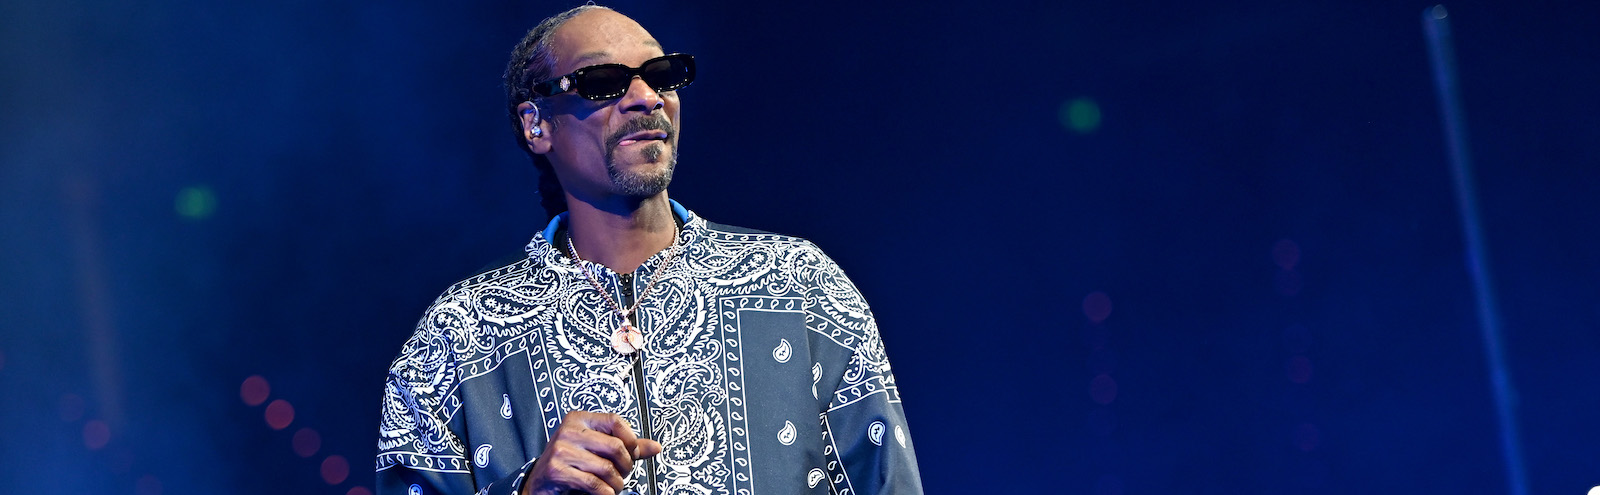 Snoop Dogg Kentucky concert